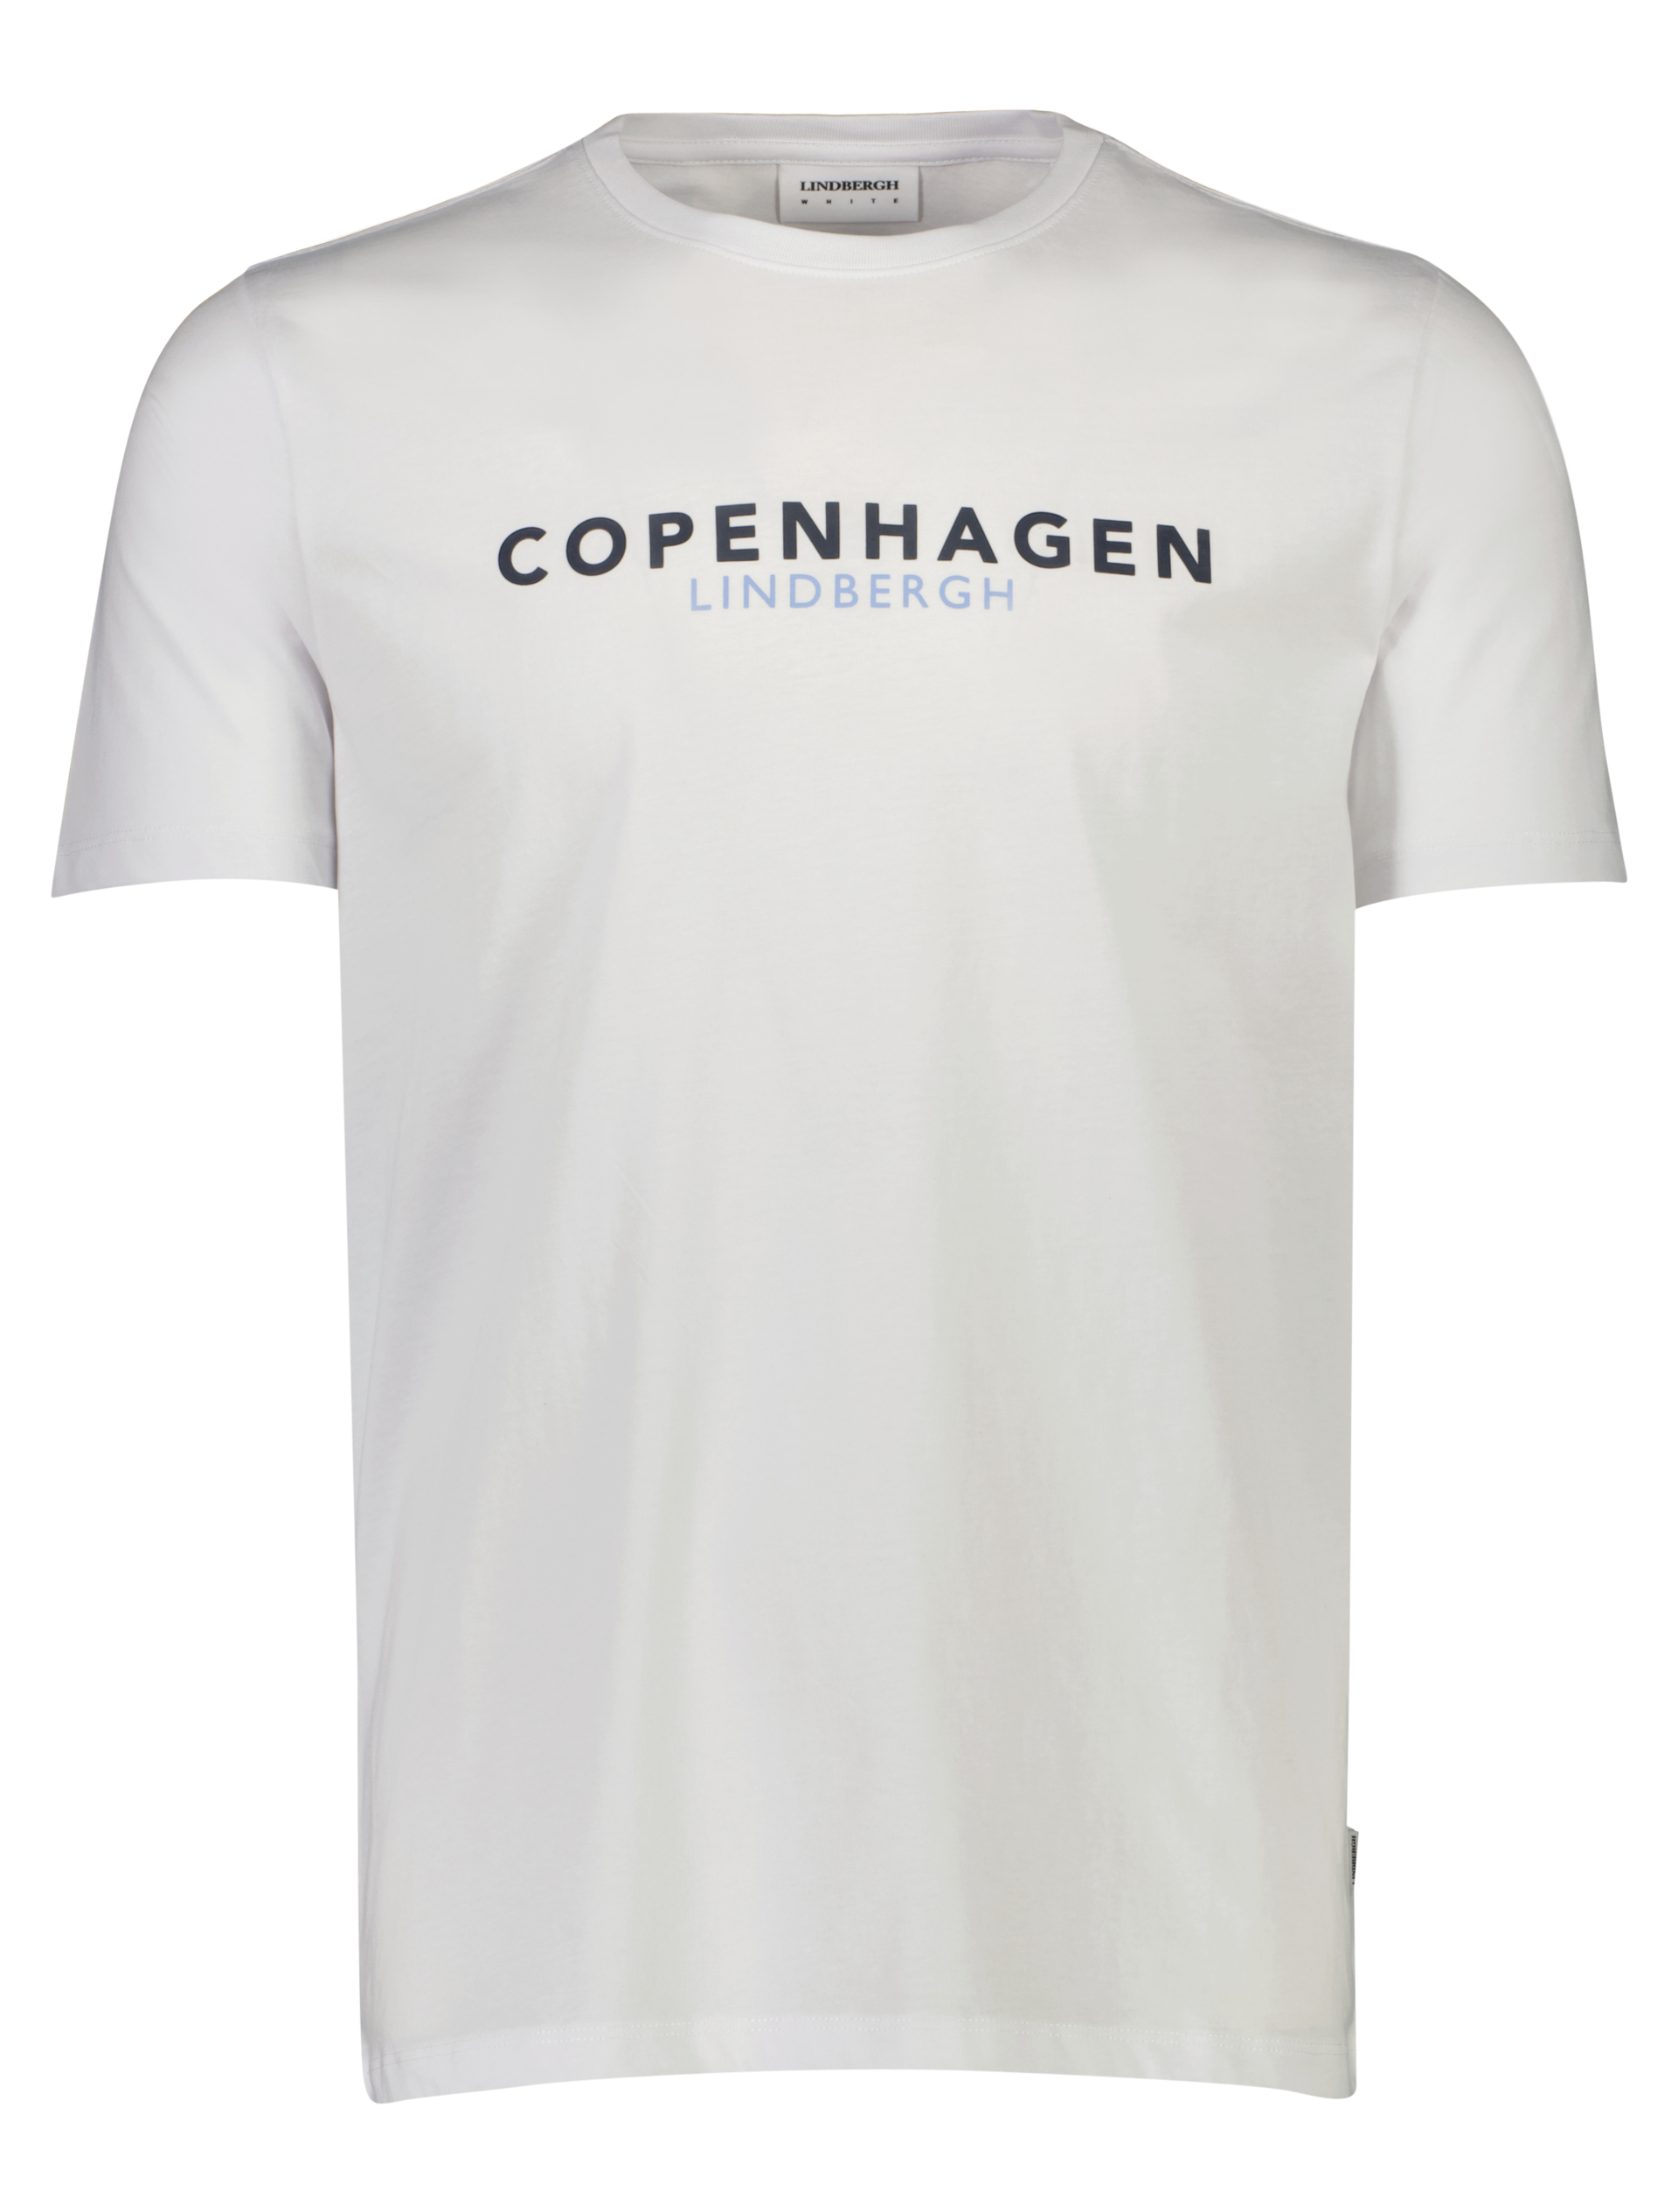 Lindbergh T-shirt weiss / white 124